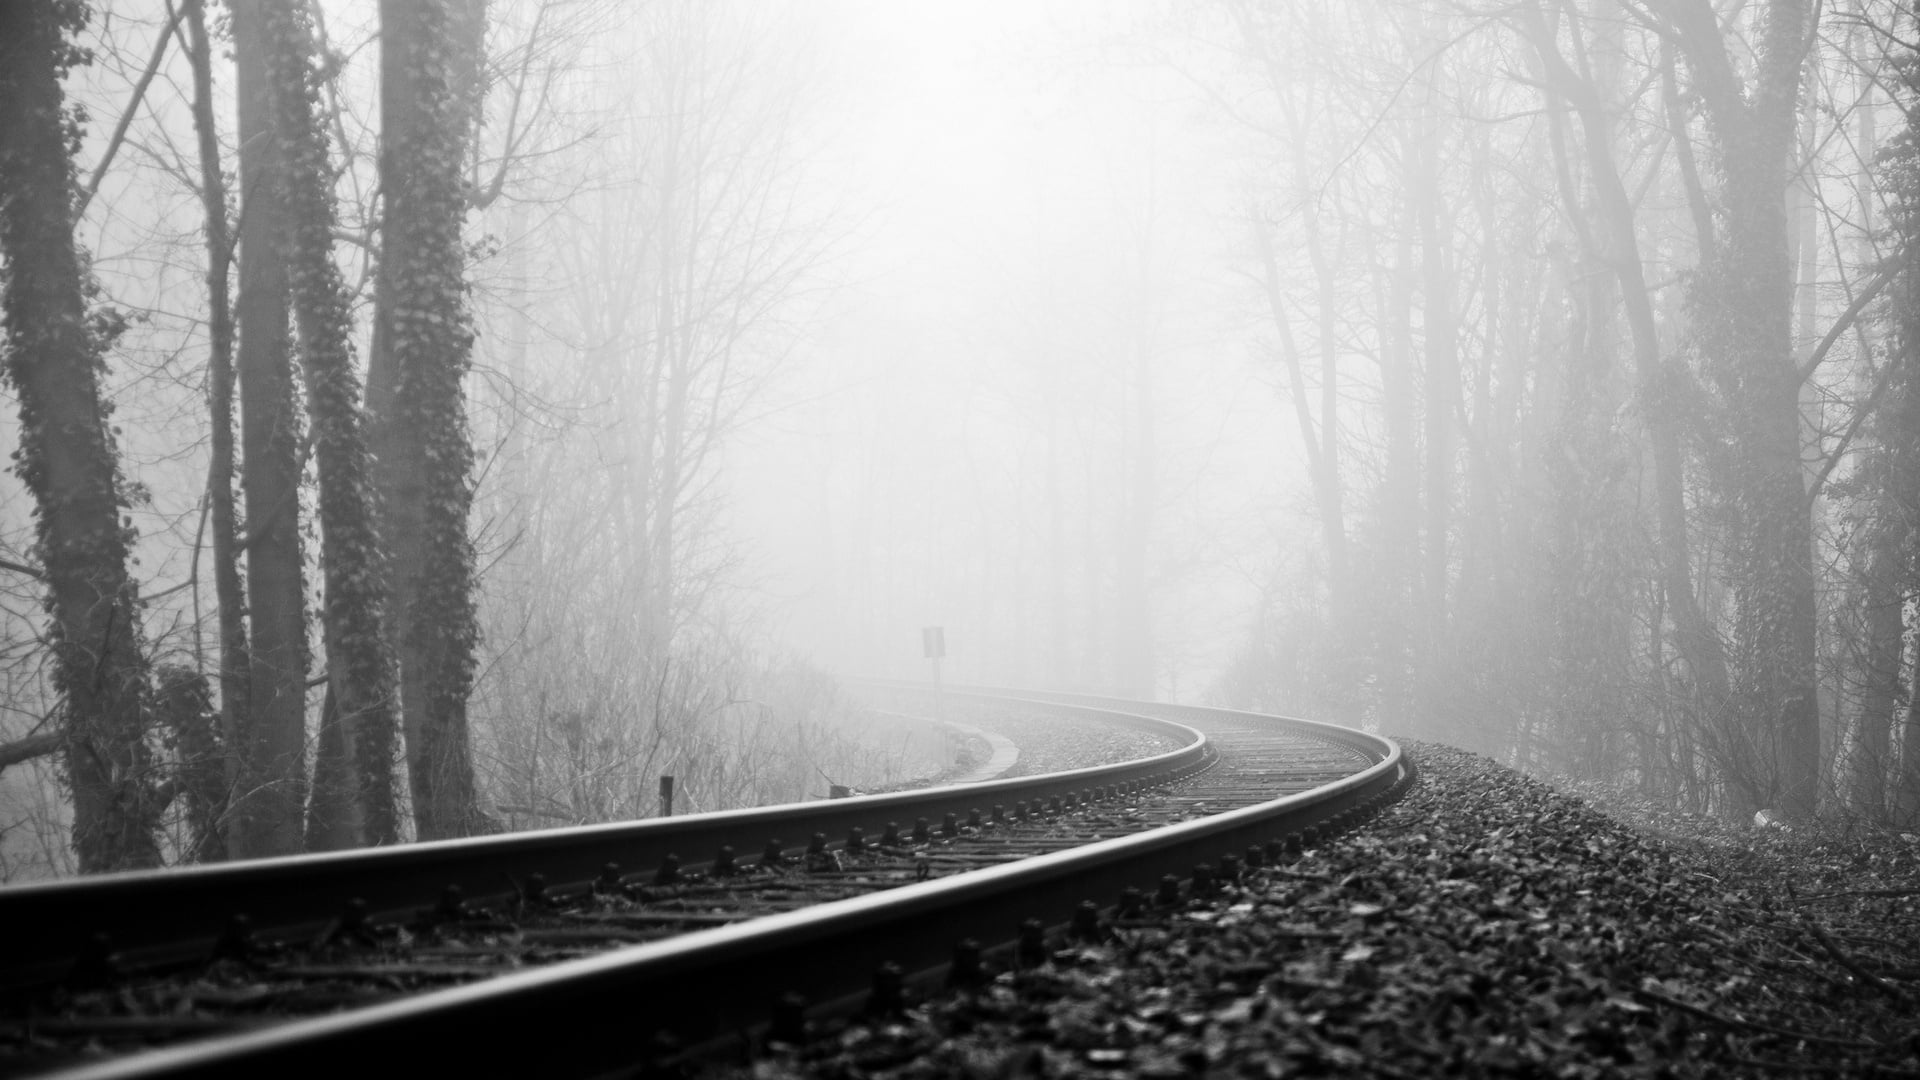 grayscale photo of foggy train rail near trees